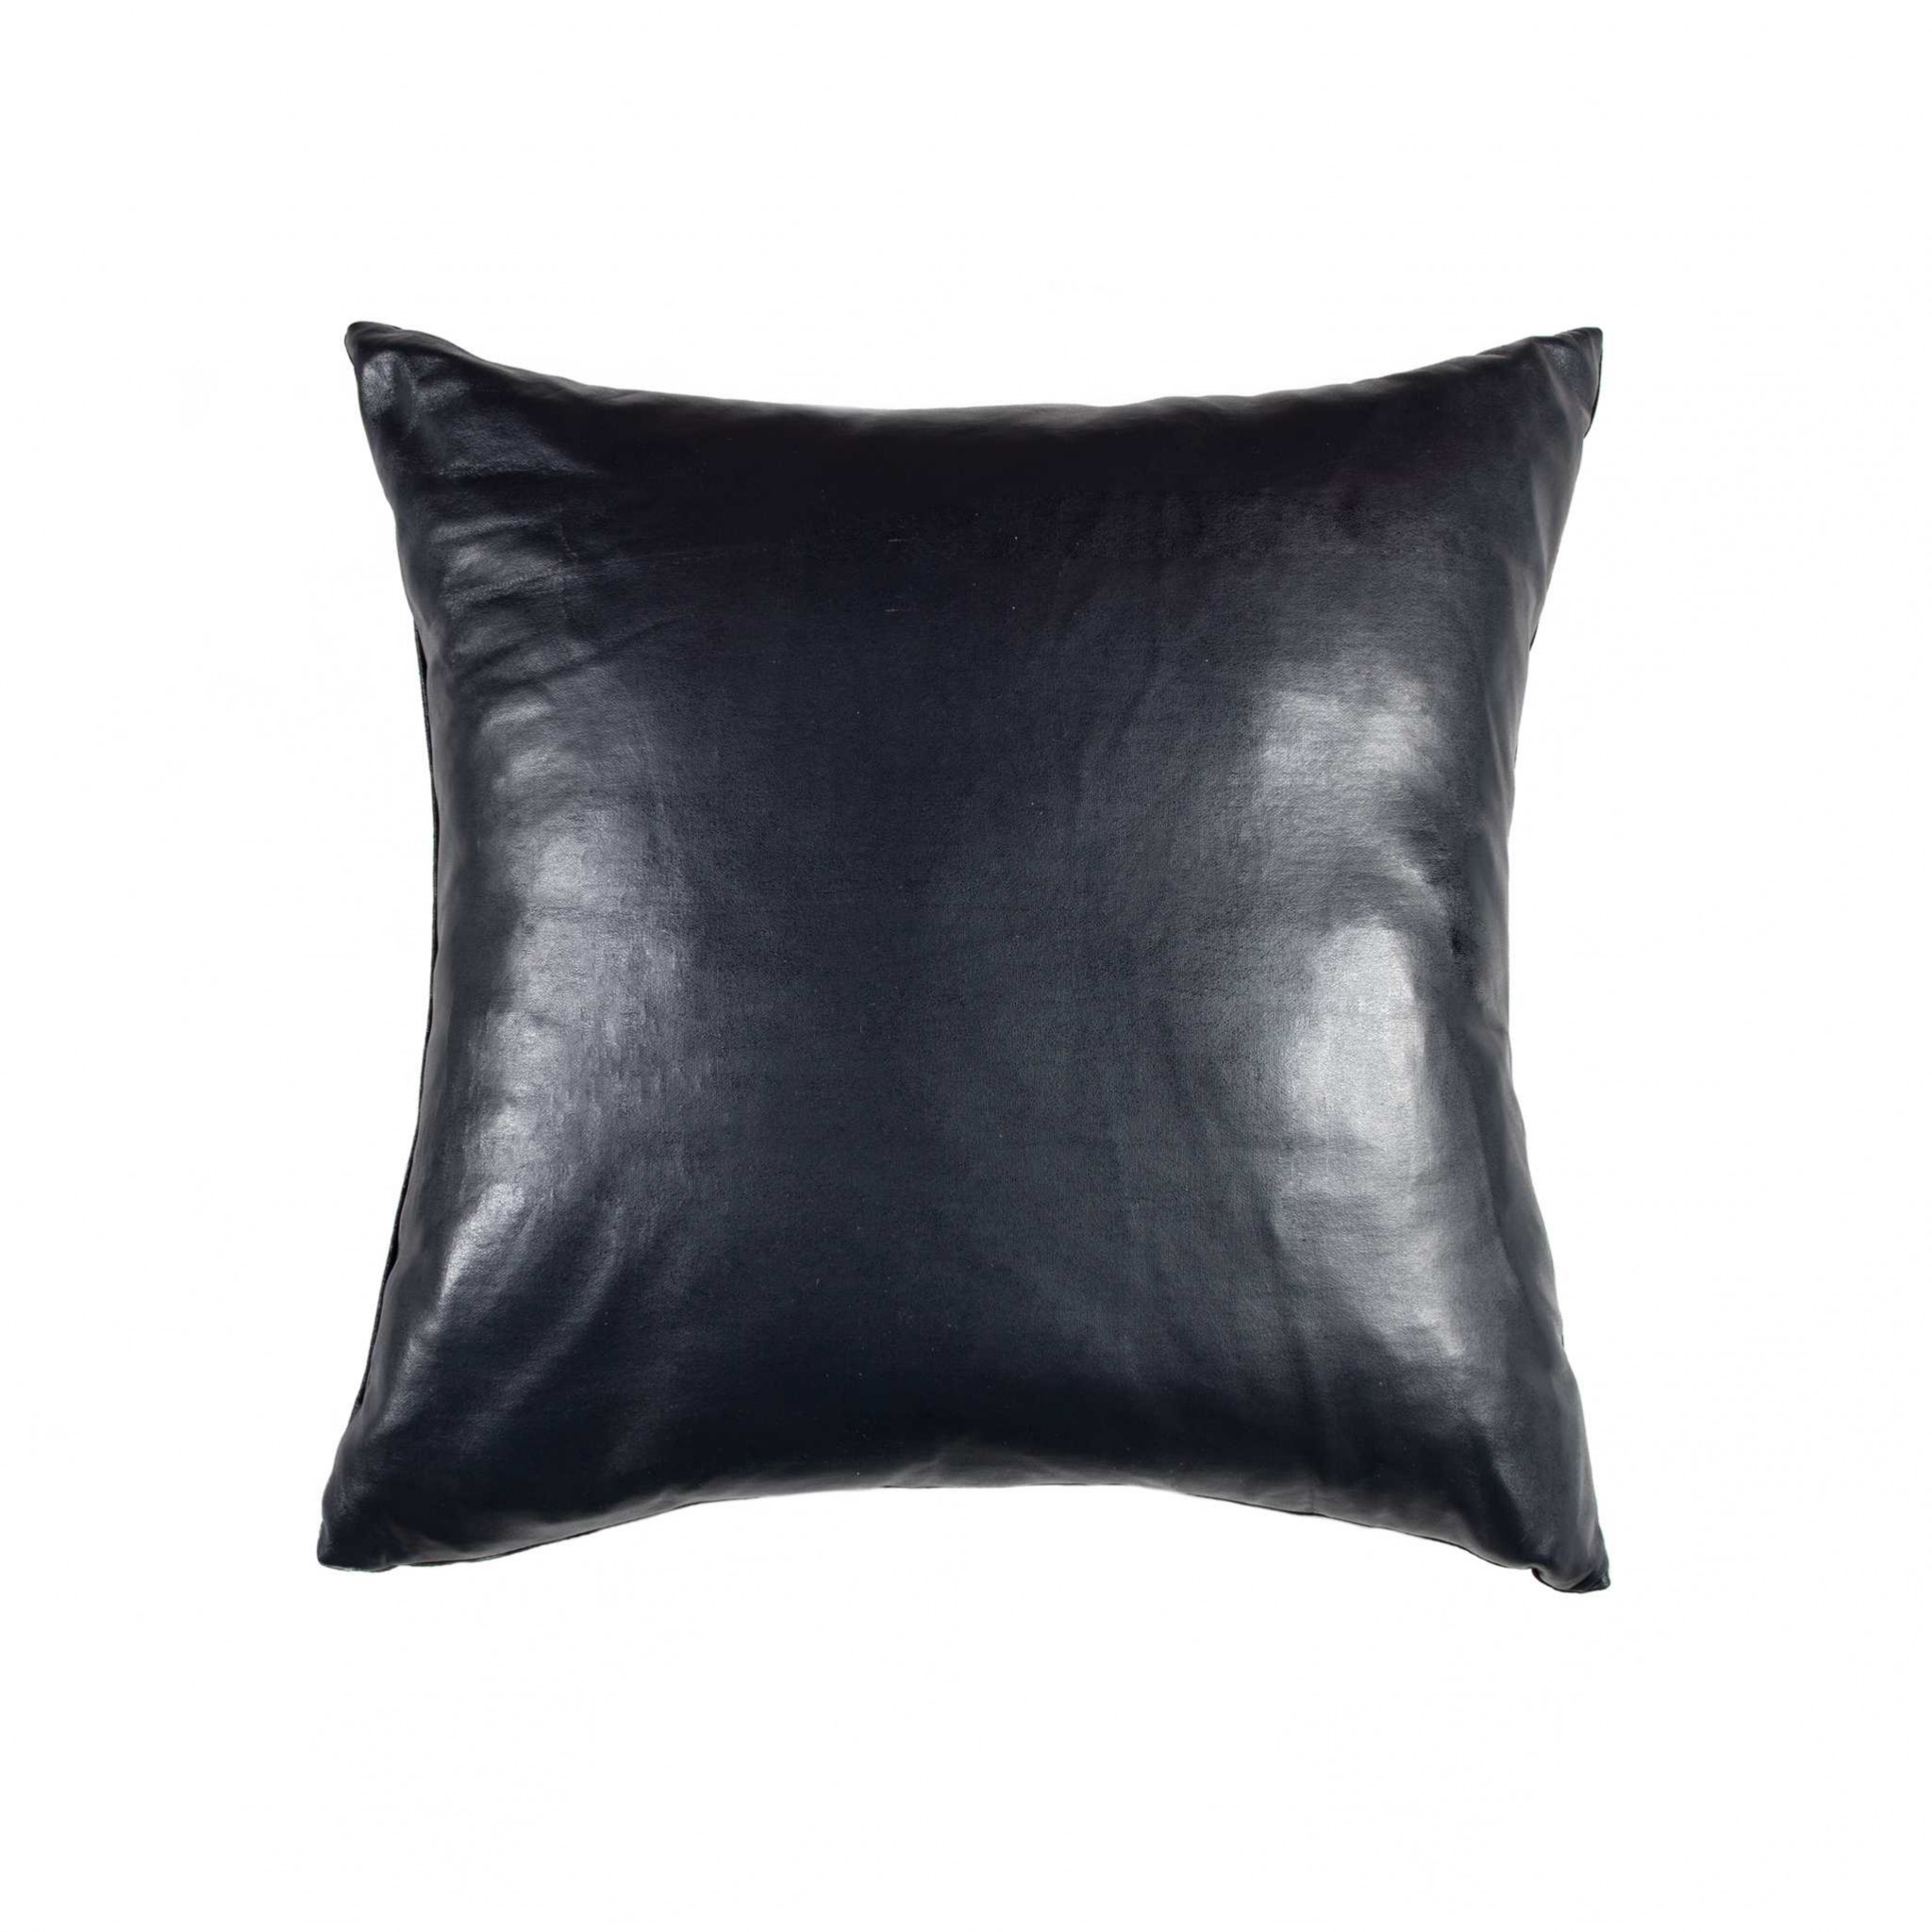 16" x 16" x 5" Saphire Blue Cowhide Leather - Pillow